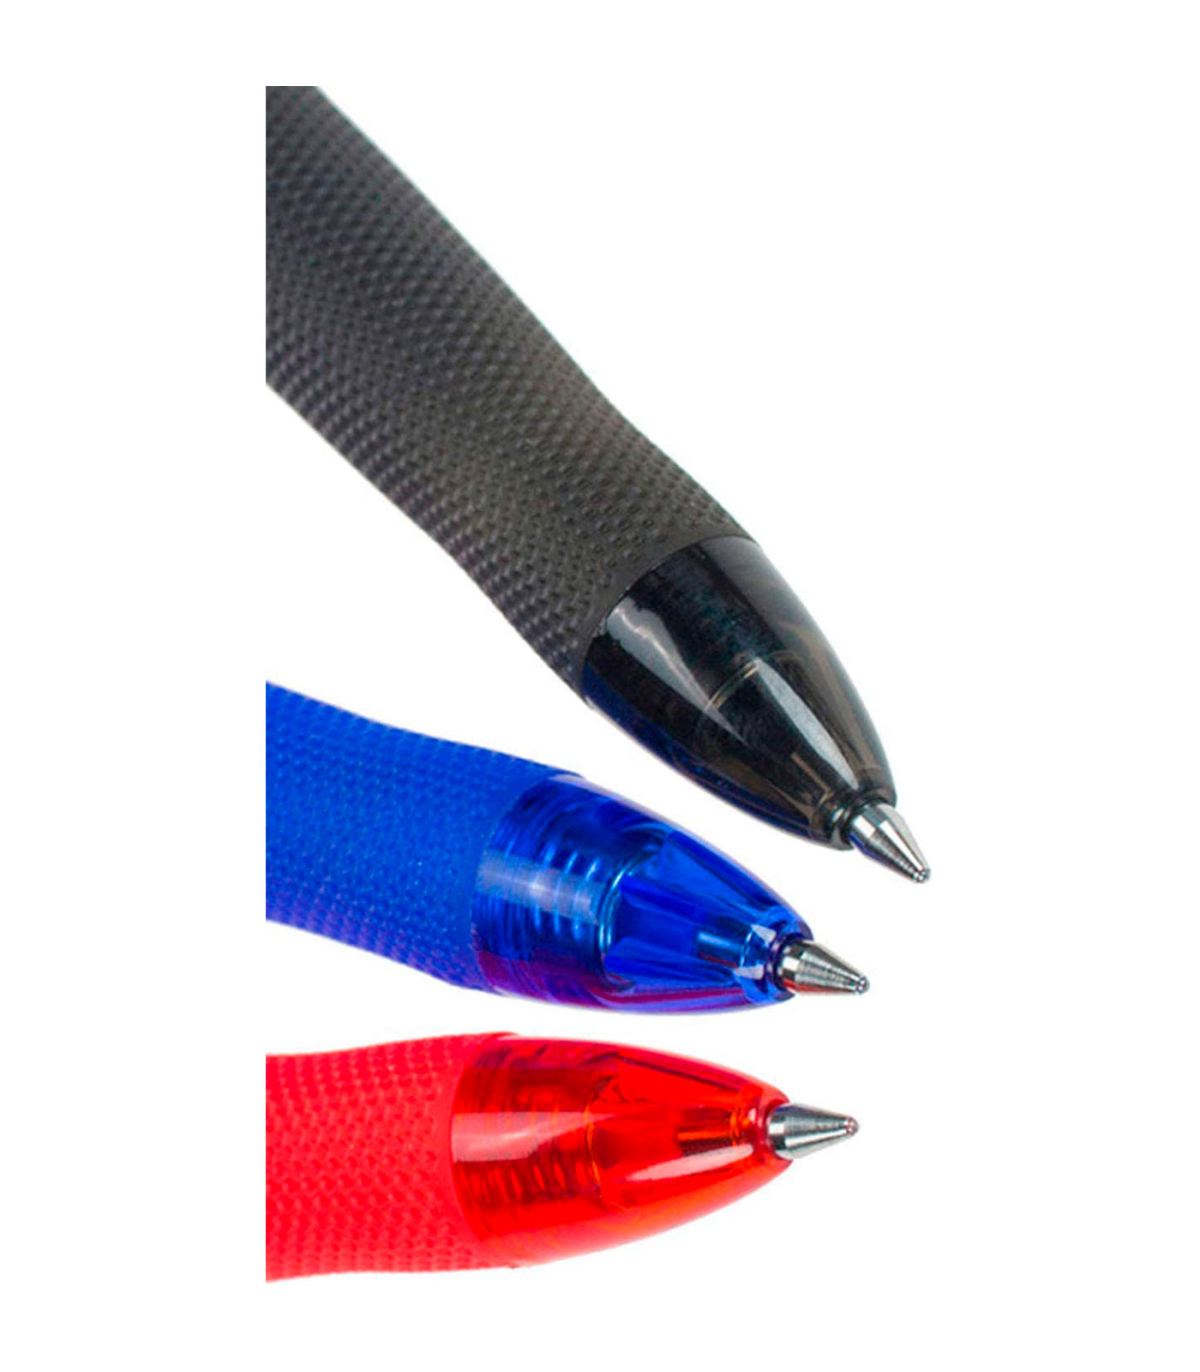 7 bolígrafos de gel borrables negros, 4 azules, 3 rojos, punta fina de  0.028 in, bolígrafos clicker retráctiles borrables para planificadores y